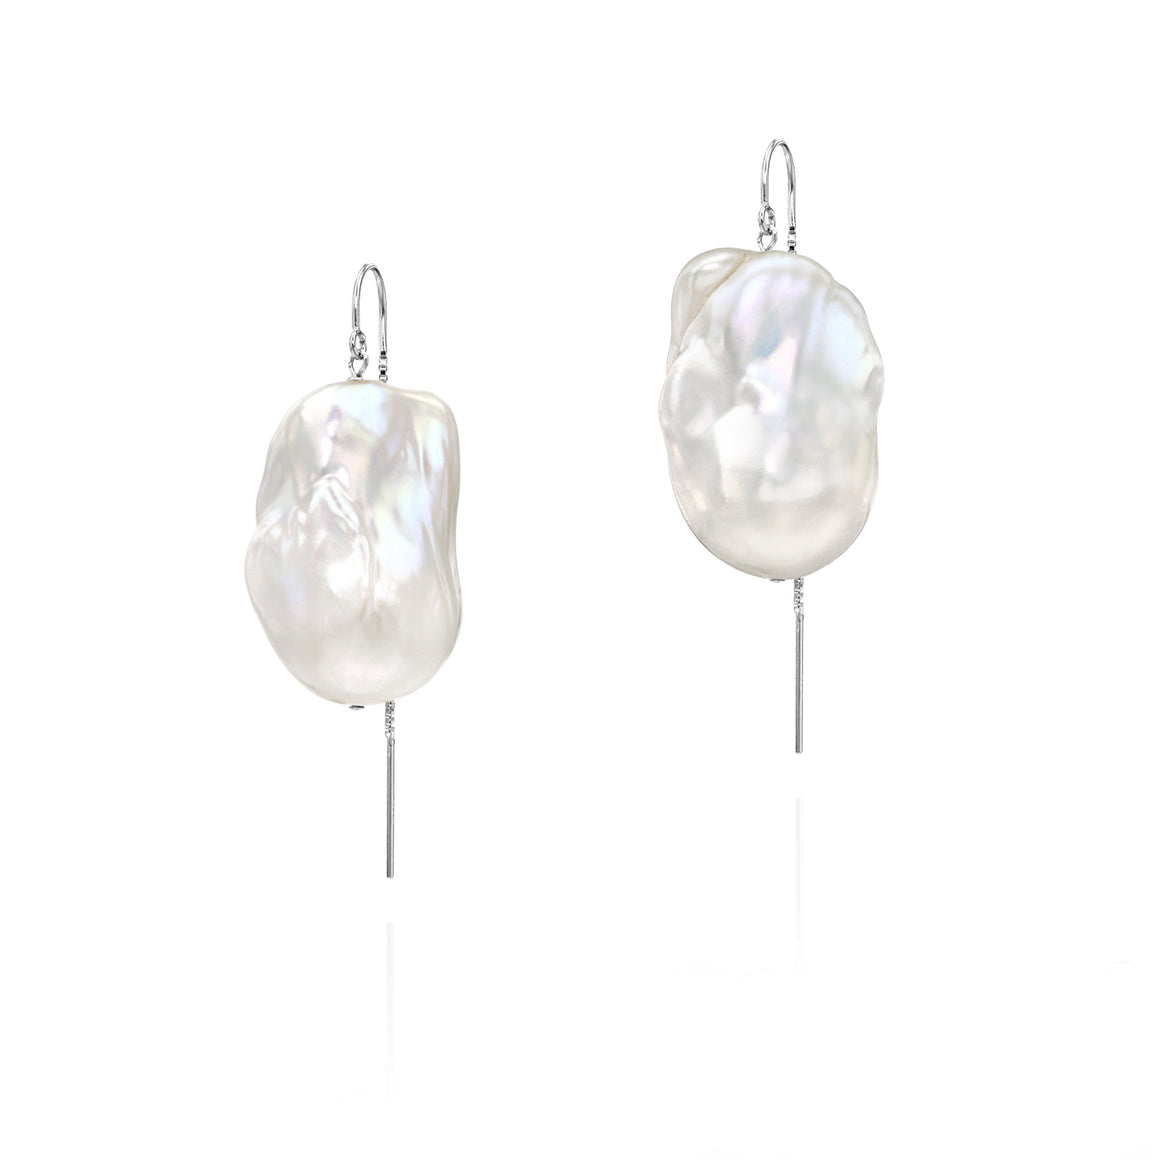 XXL Runway Size Baroque Freshwater Pearl Drop Threader Earrings 14K White Gold